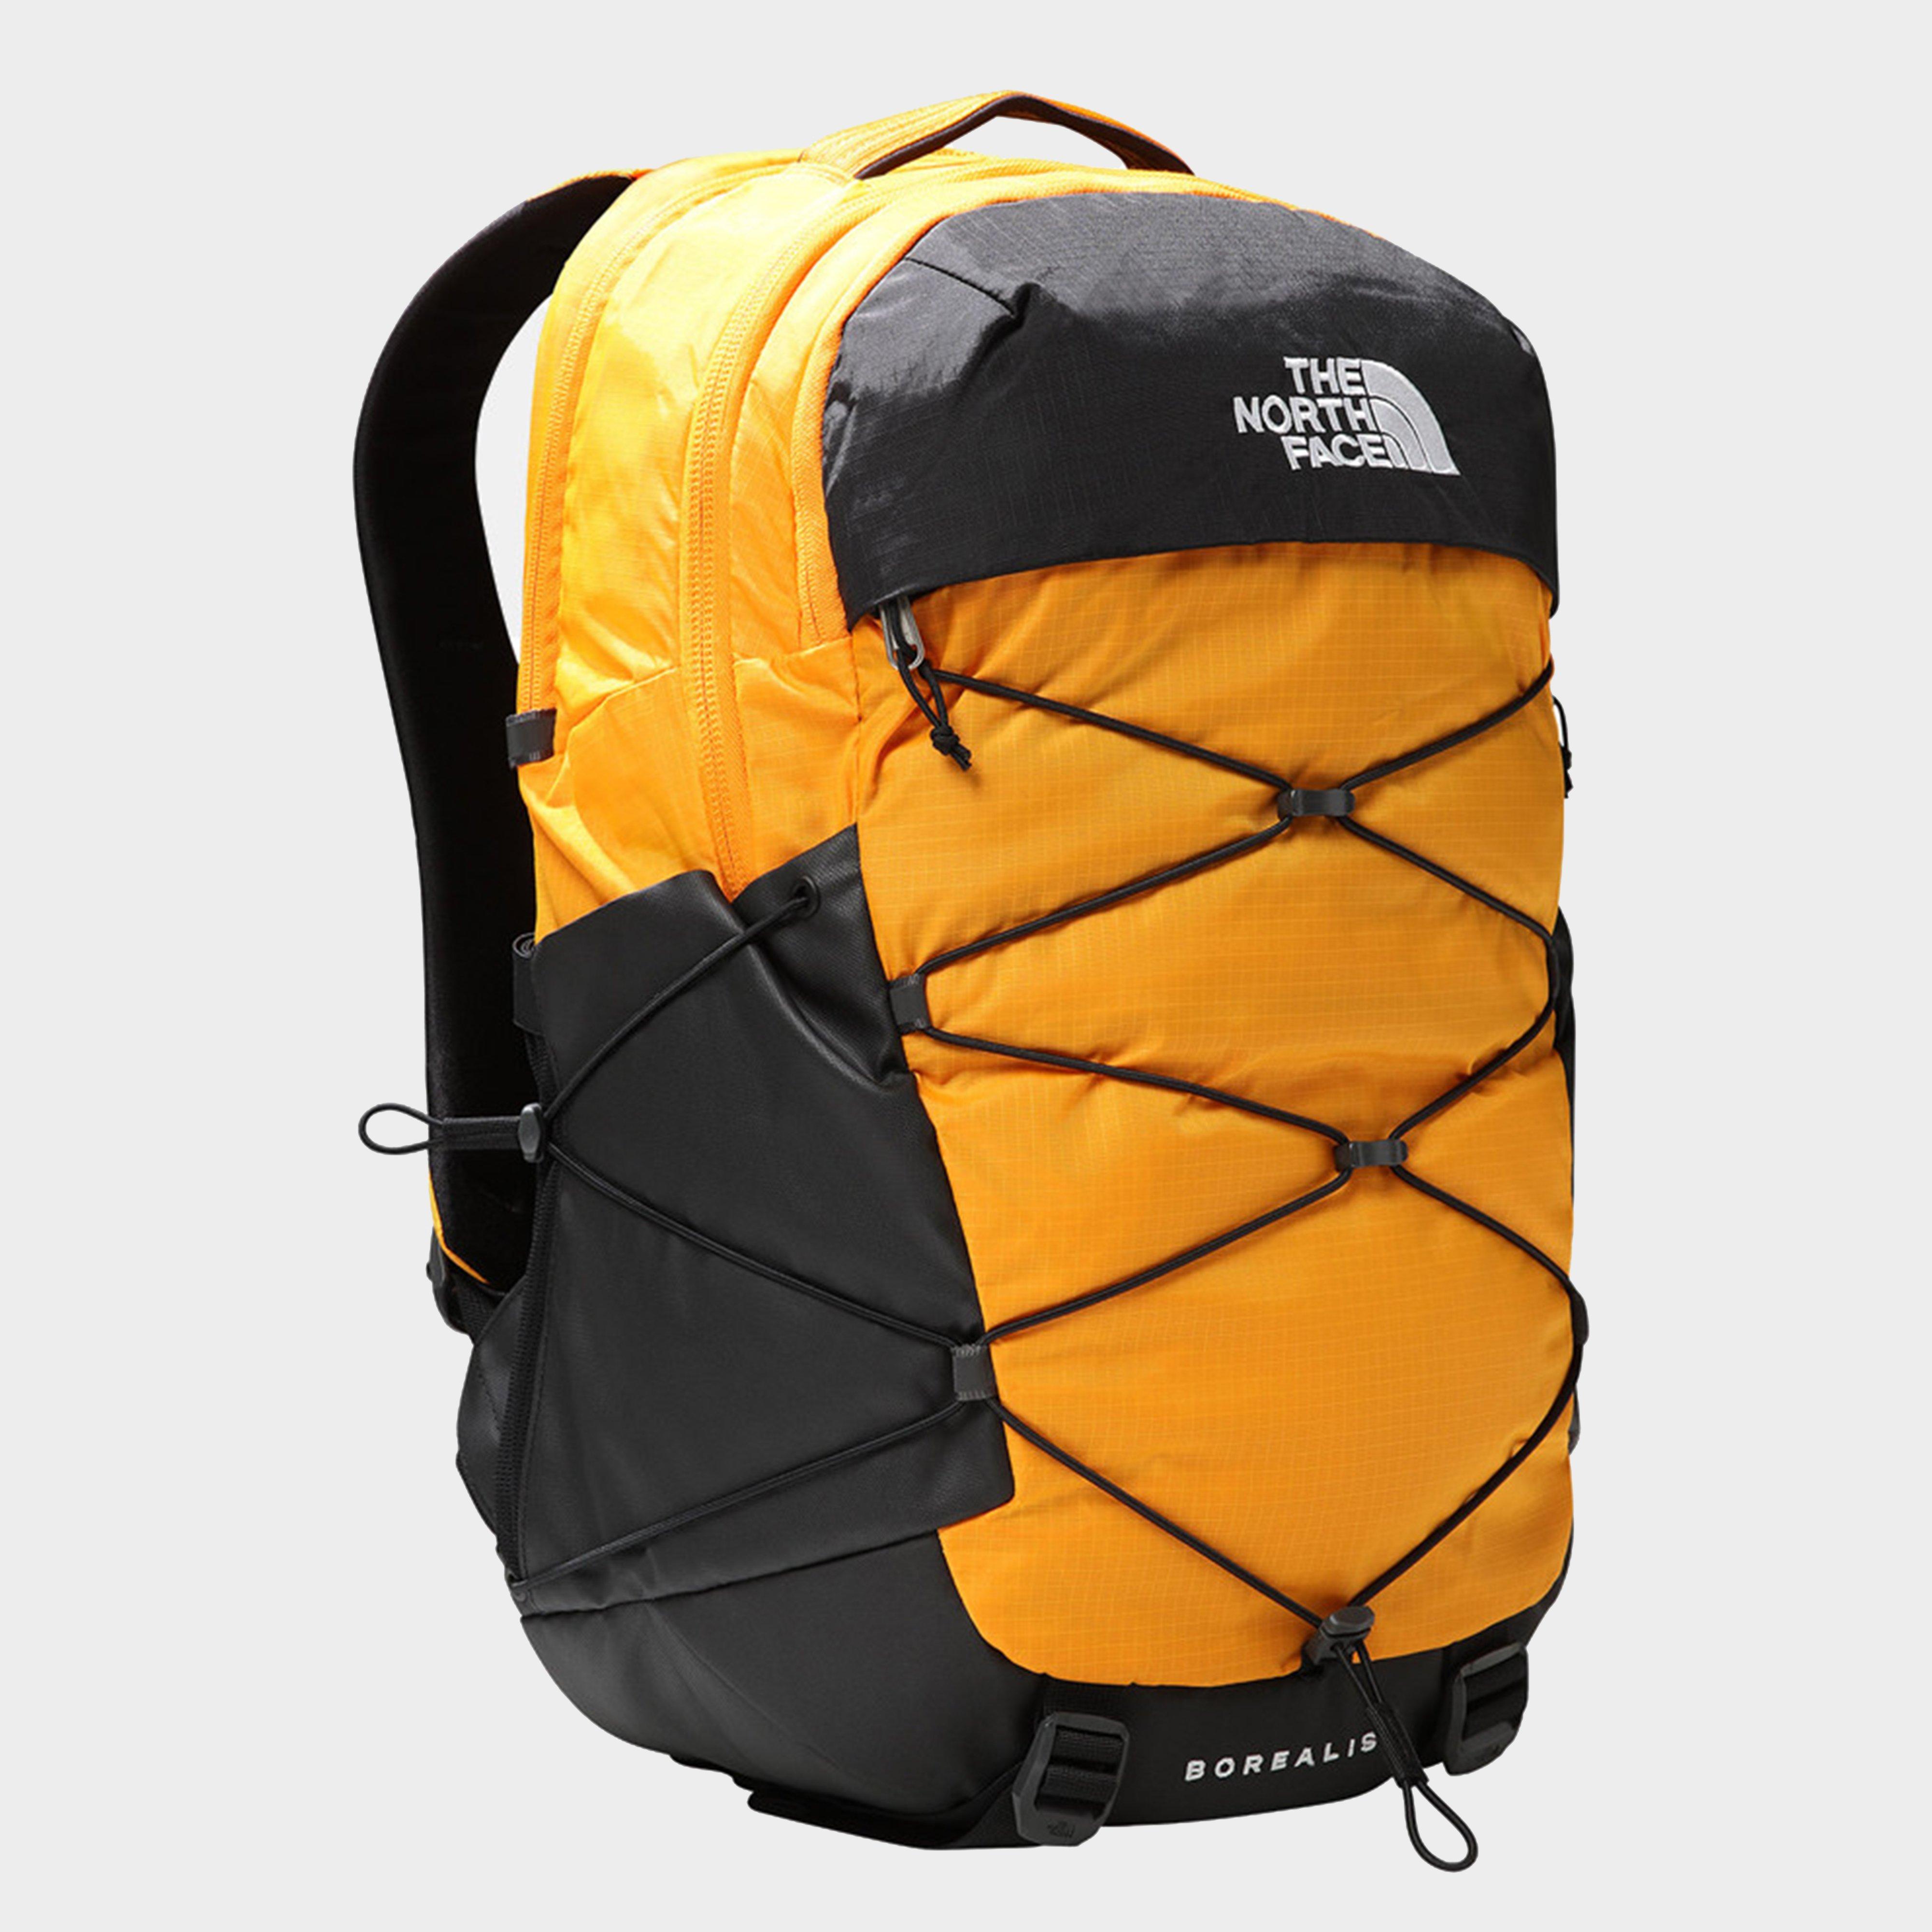 The North Face Borealis Backpack - Yellow/black  Yellow/black